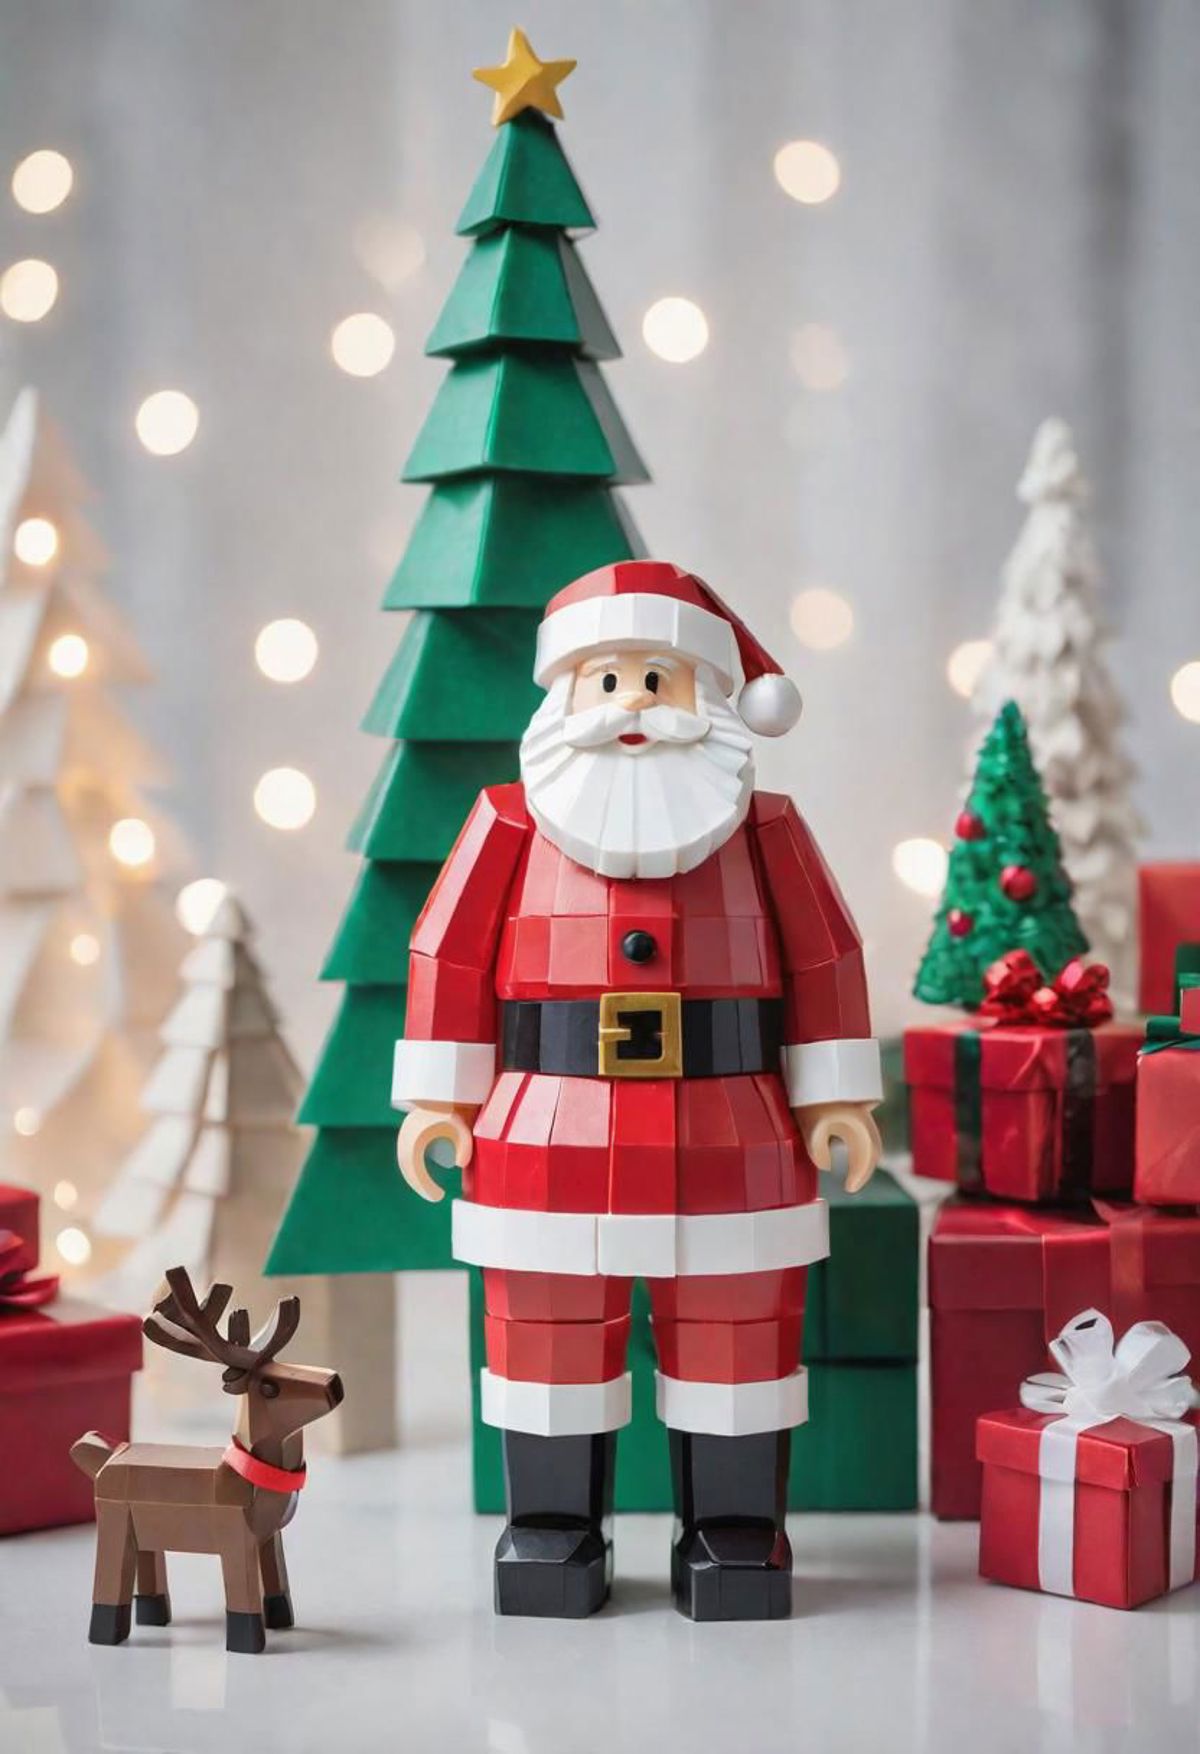 A Lego Santa Claus figure standing next to a Christmas tree.